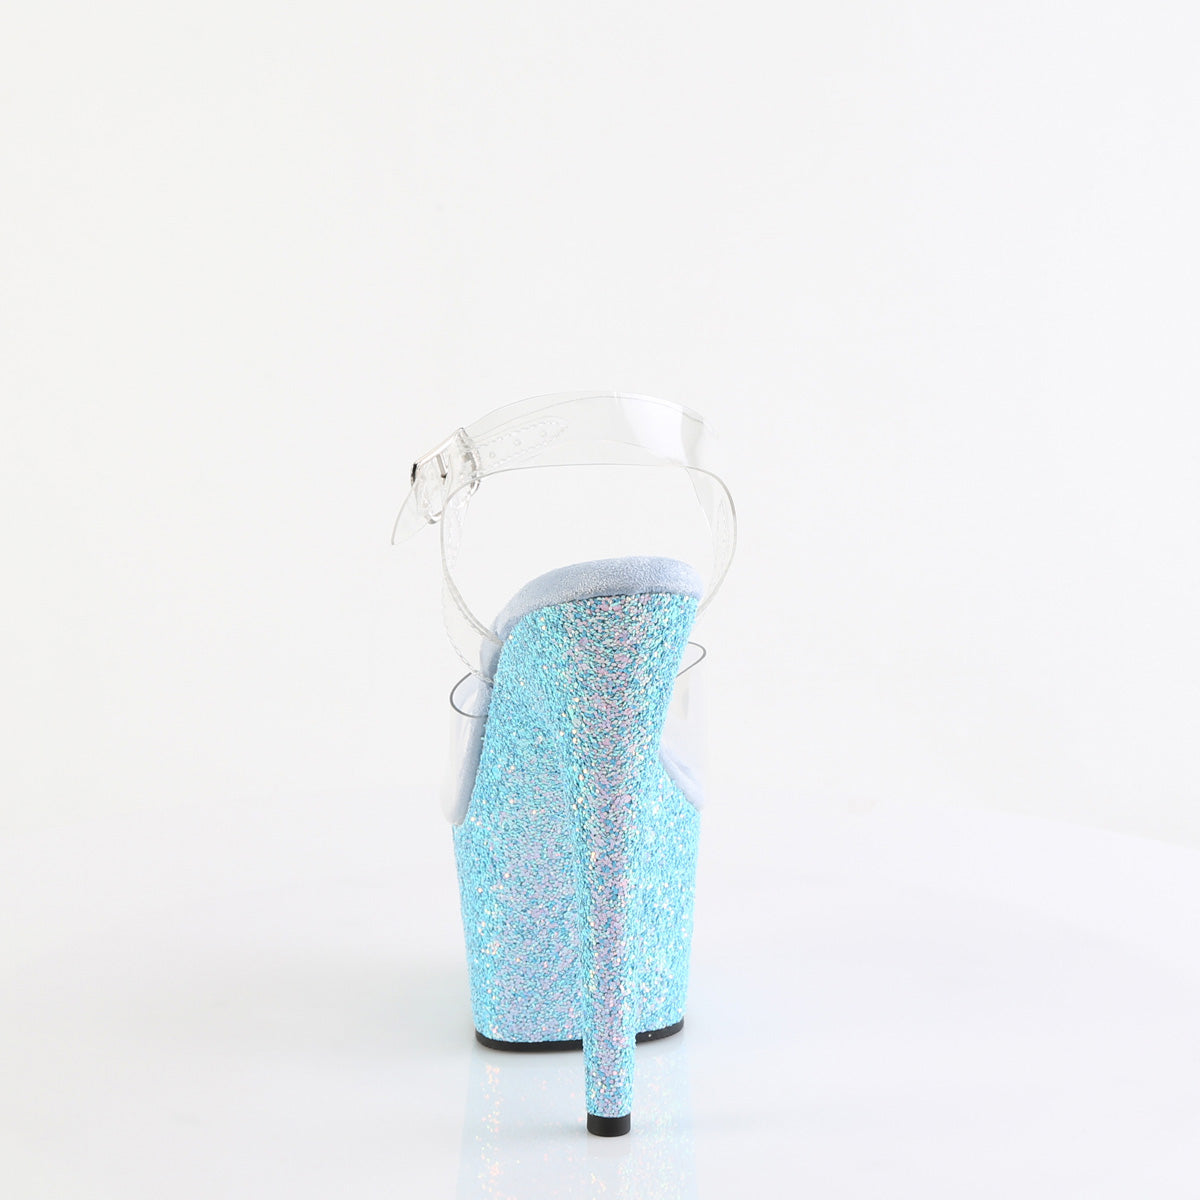 ADORE-708LG Pleaser 7 Inch Baby Blue Glitter Platform High Heel Sandals